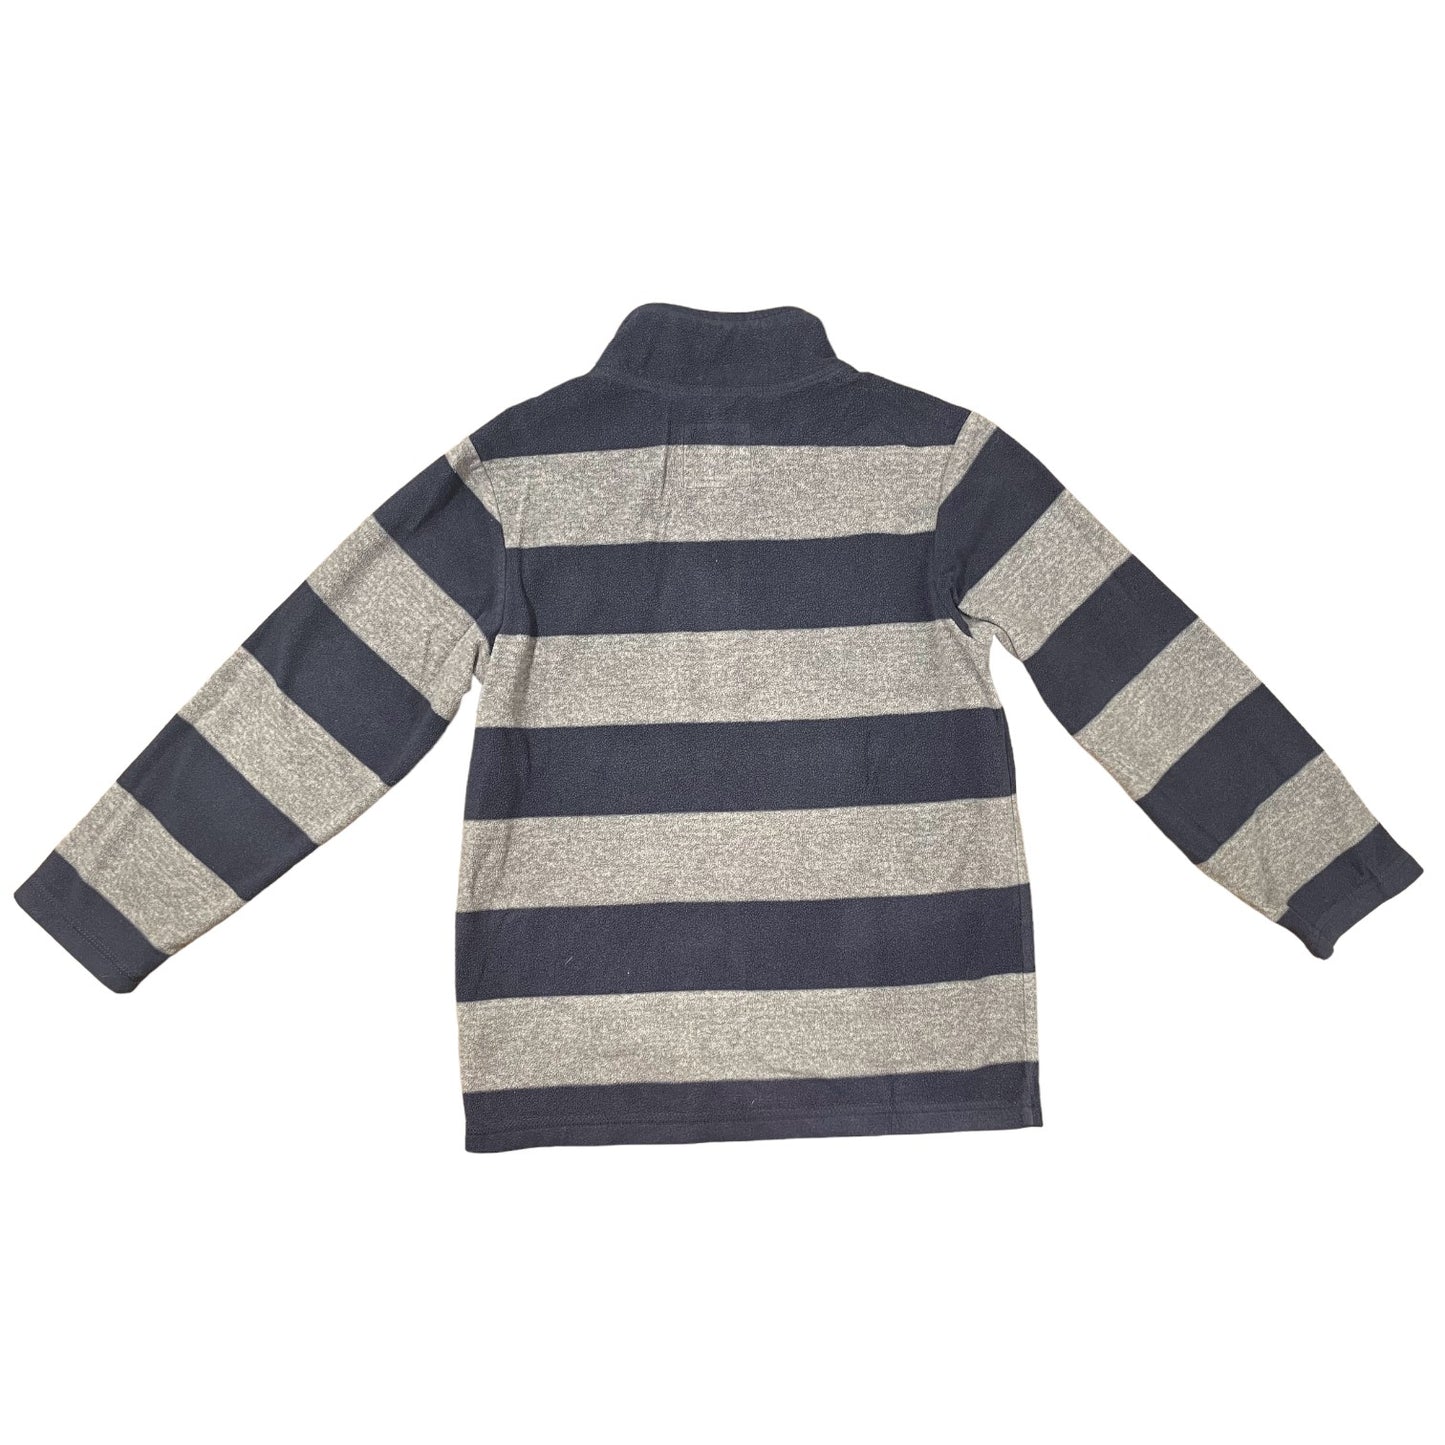 Oshkosh B'Gosh Boys Fleece Sweater size 7